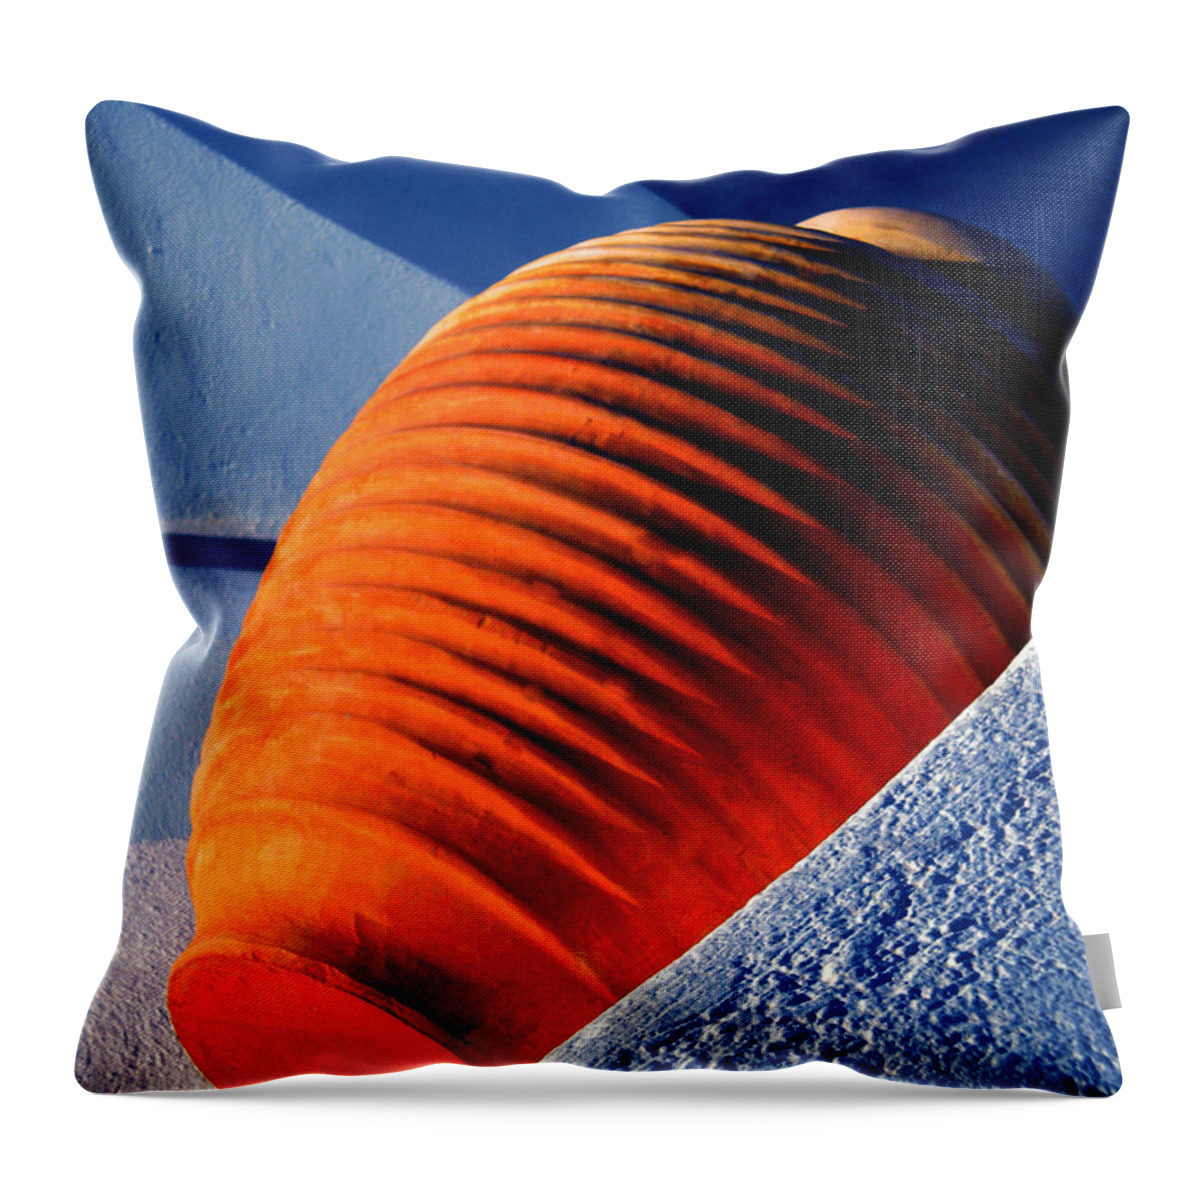 Colette Throw Pillow featuring the photograph Santorini Ceramics Pot Greece by Colette V Hera Guggenheim